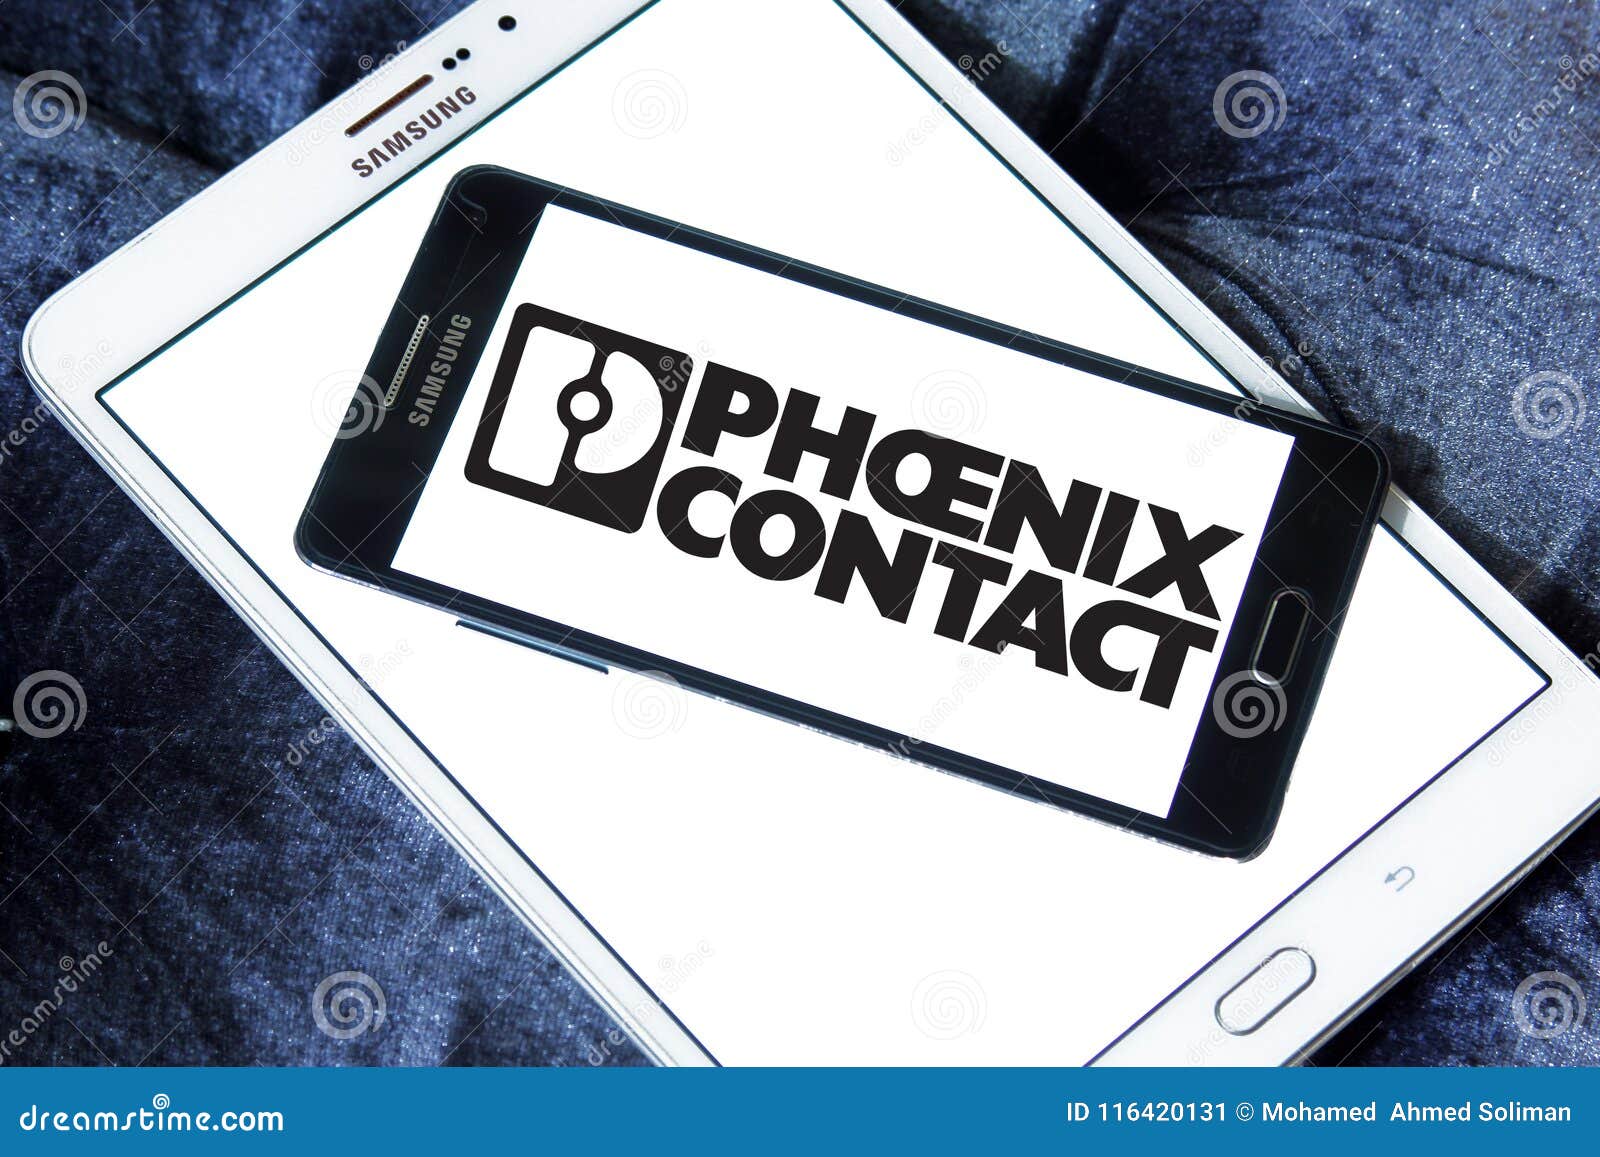 The company  Phoenix Contact